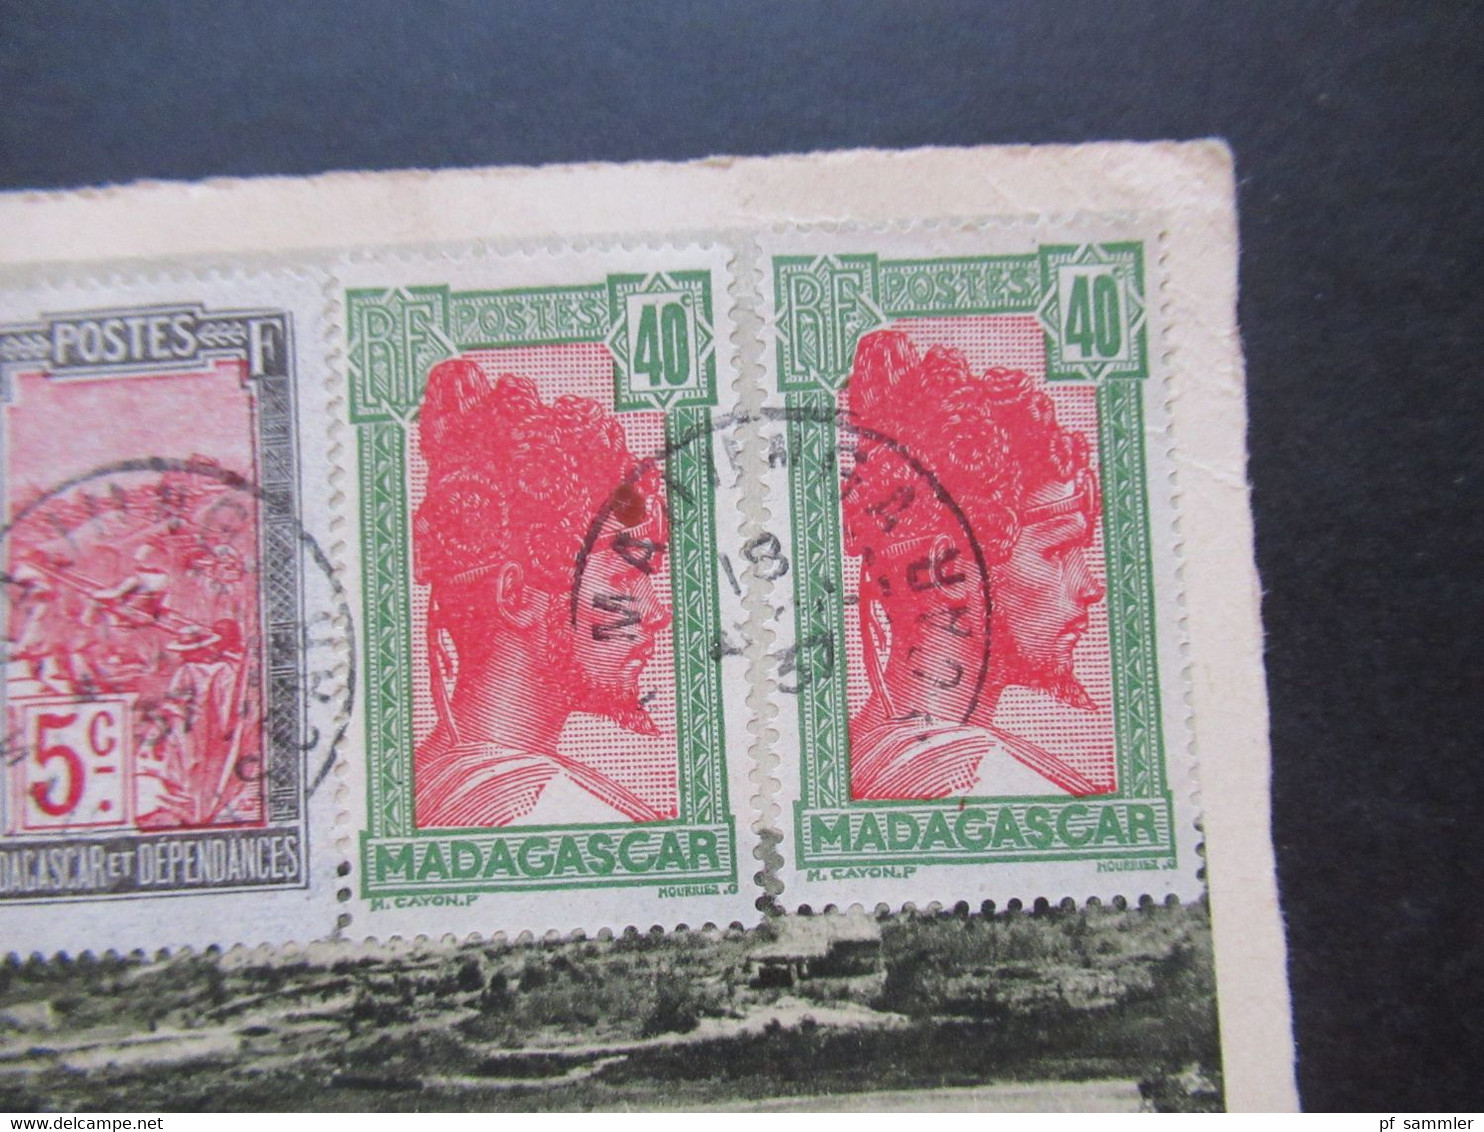 AK 1937 Madagaskar Majunga La Digue Metzinger Bildseitig Frankiert Madagascar Et Dependances PK Nach Hildesheim - Briefe U. Dokumente